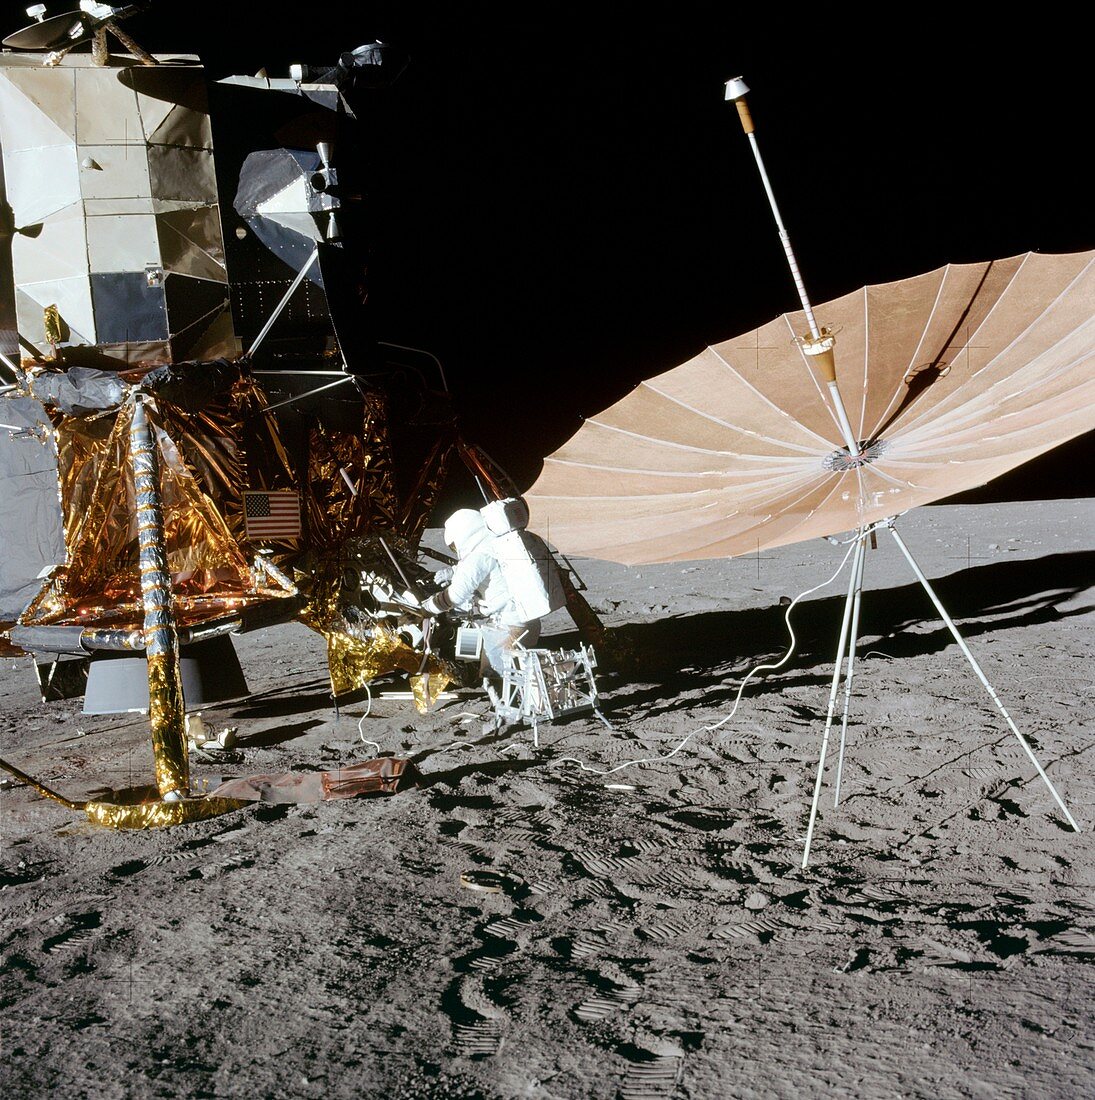 Apollo 12 astronaut handling equipment, 1969